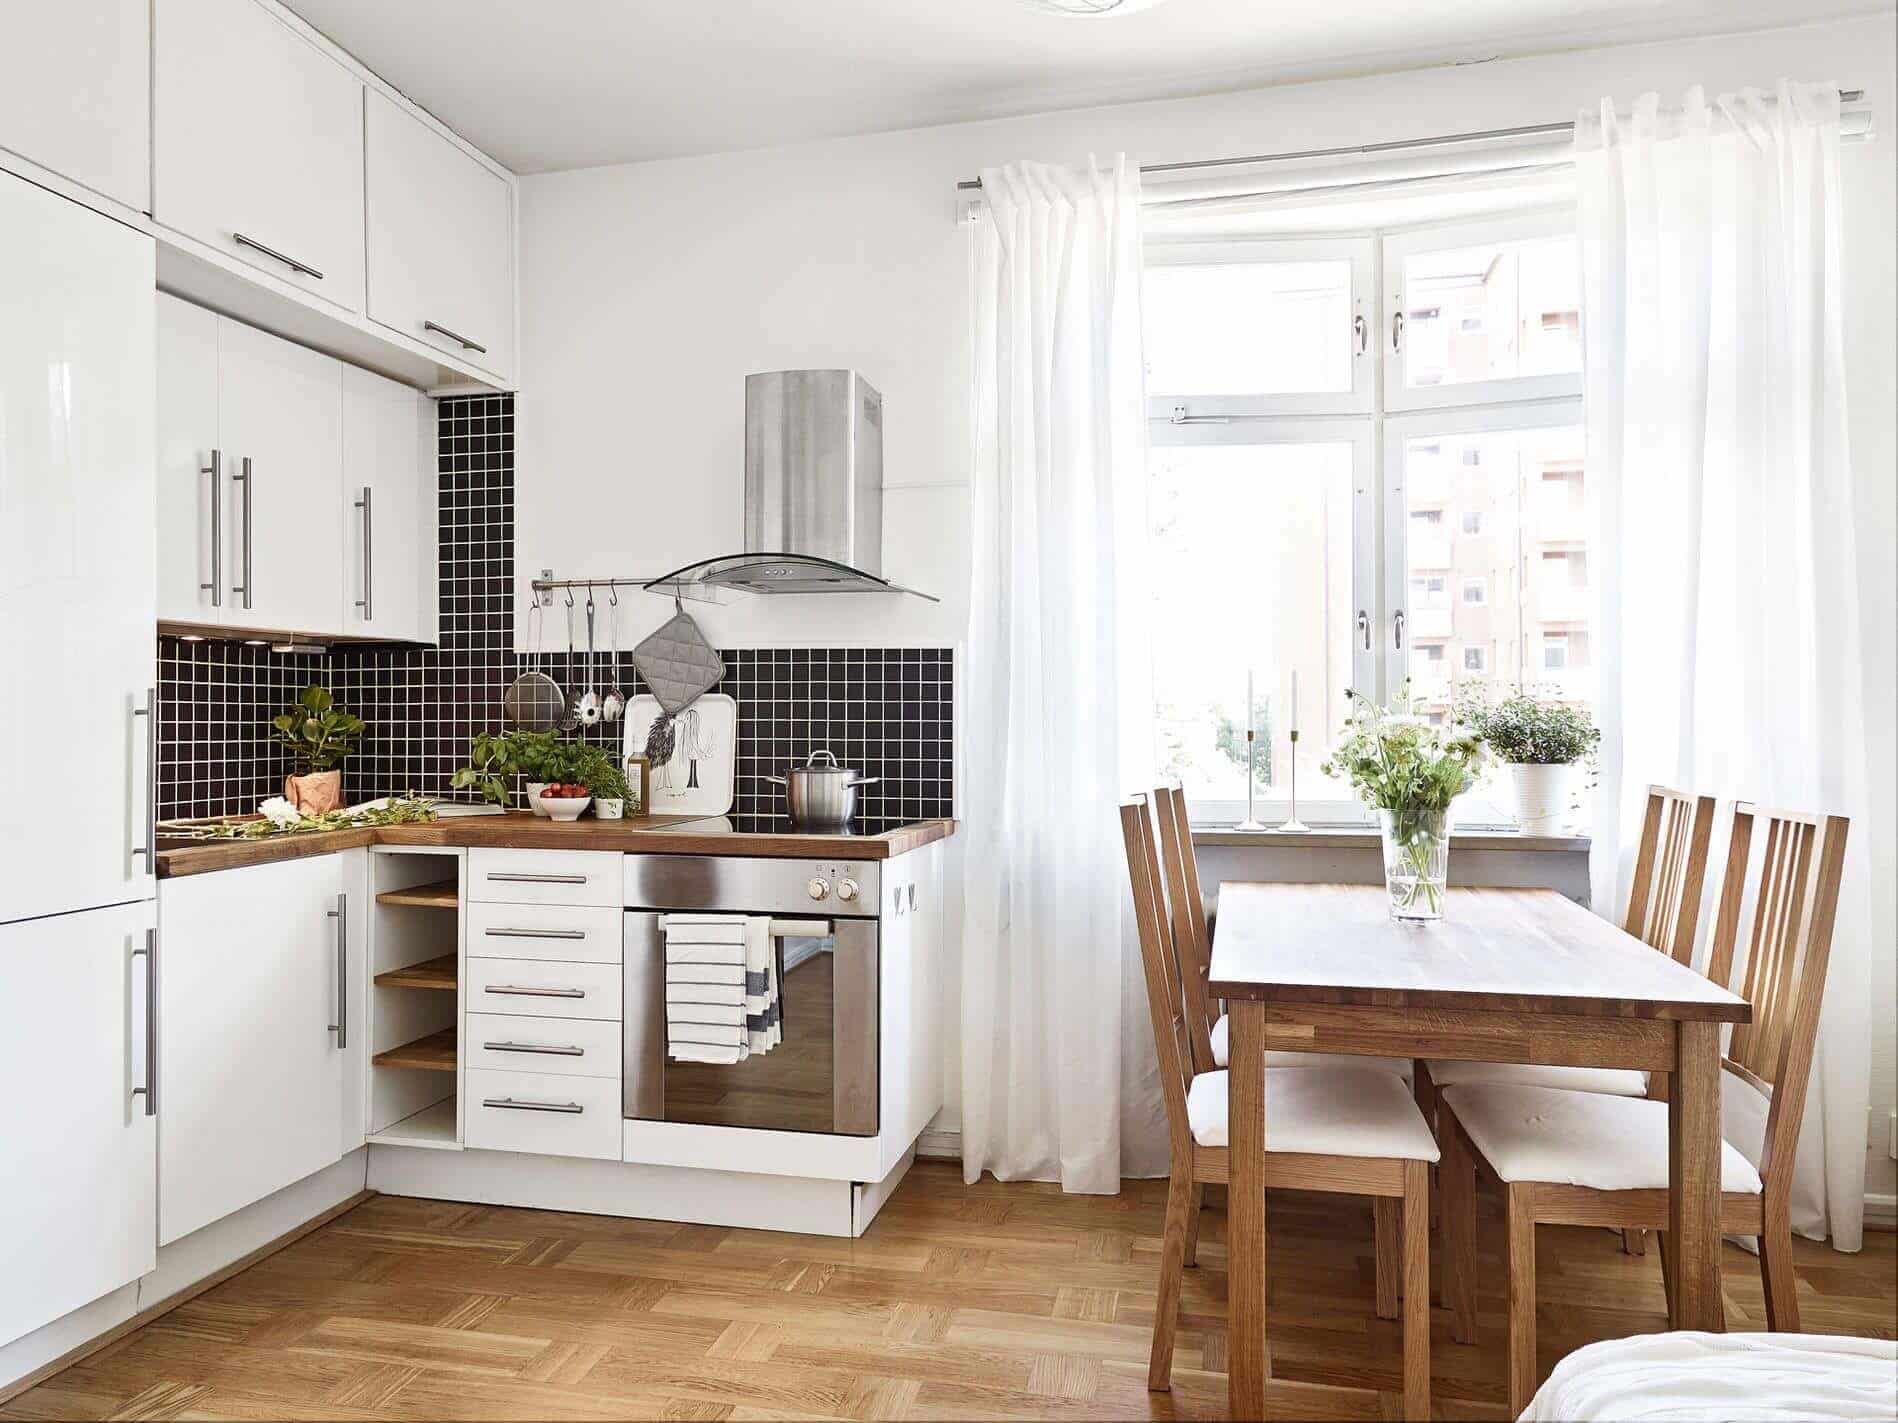 Desain dapur kecil minimalis dengan nuansa light white - Thegorbalsla